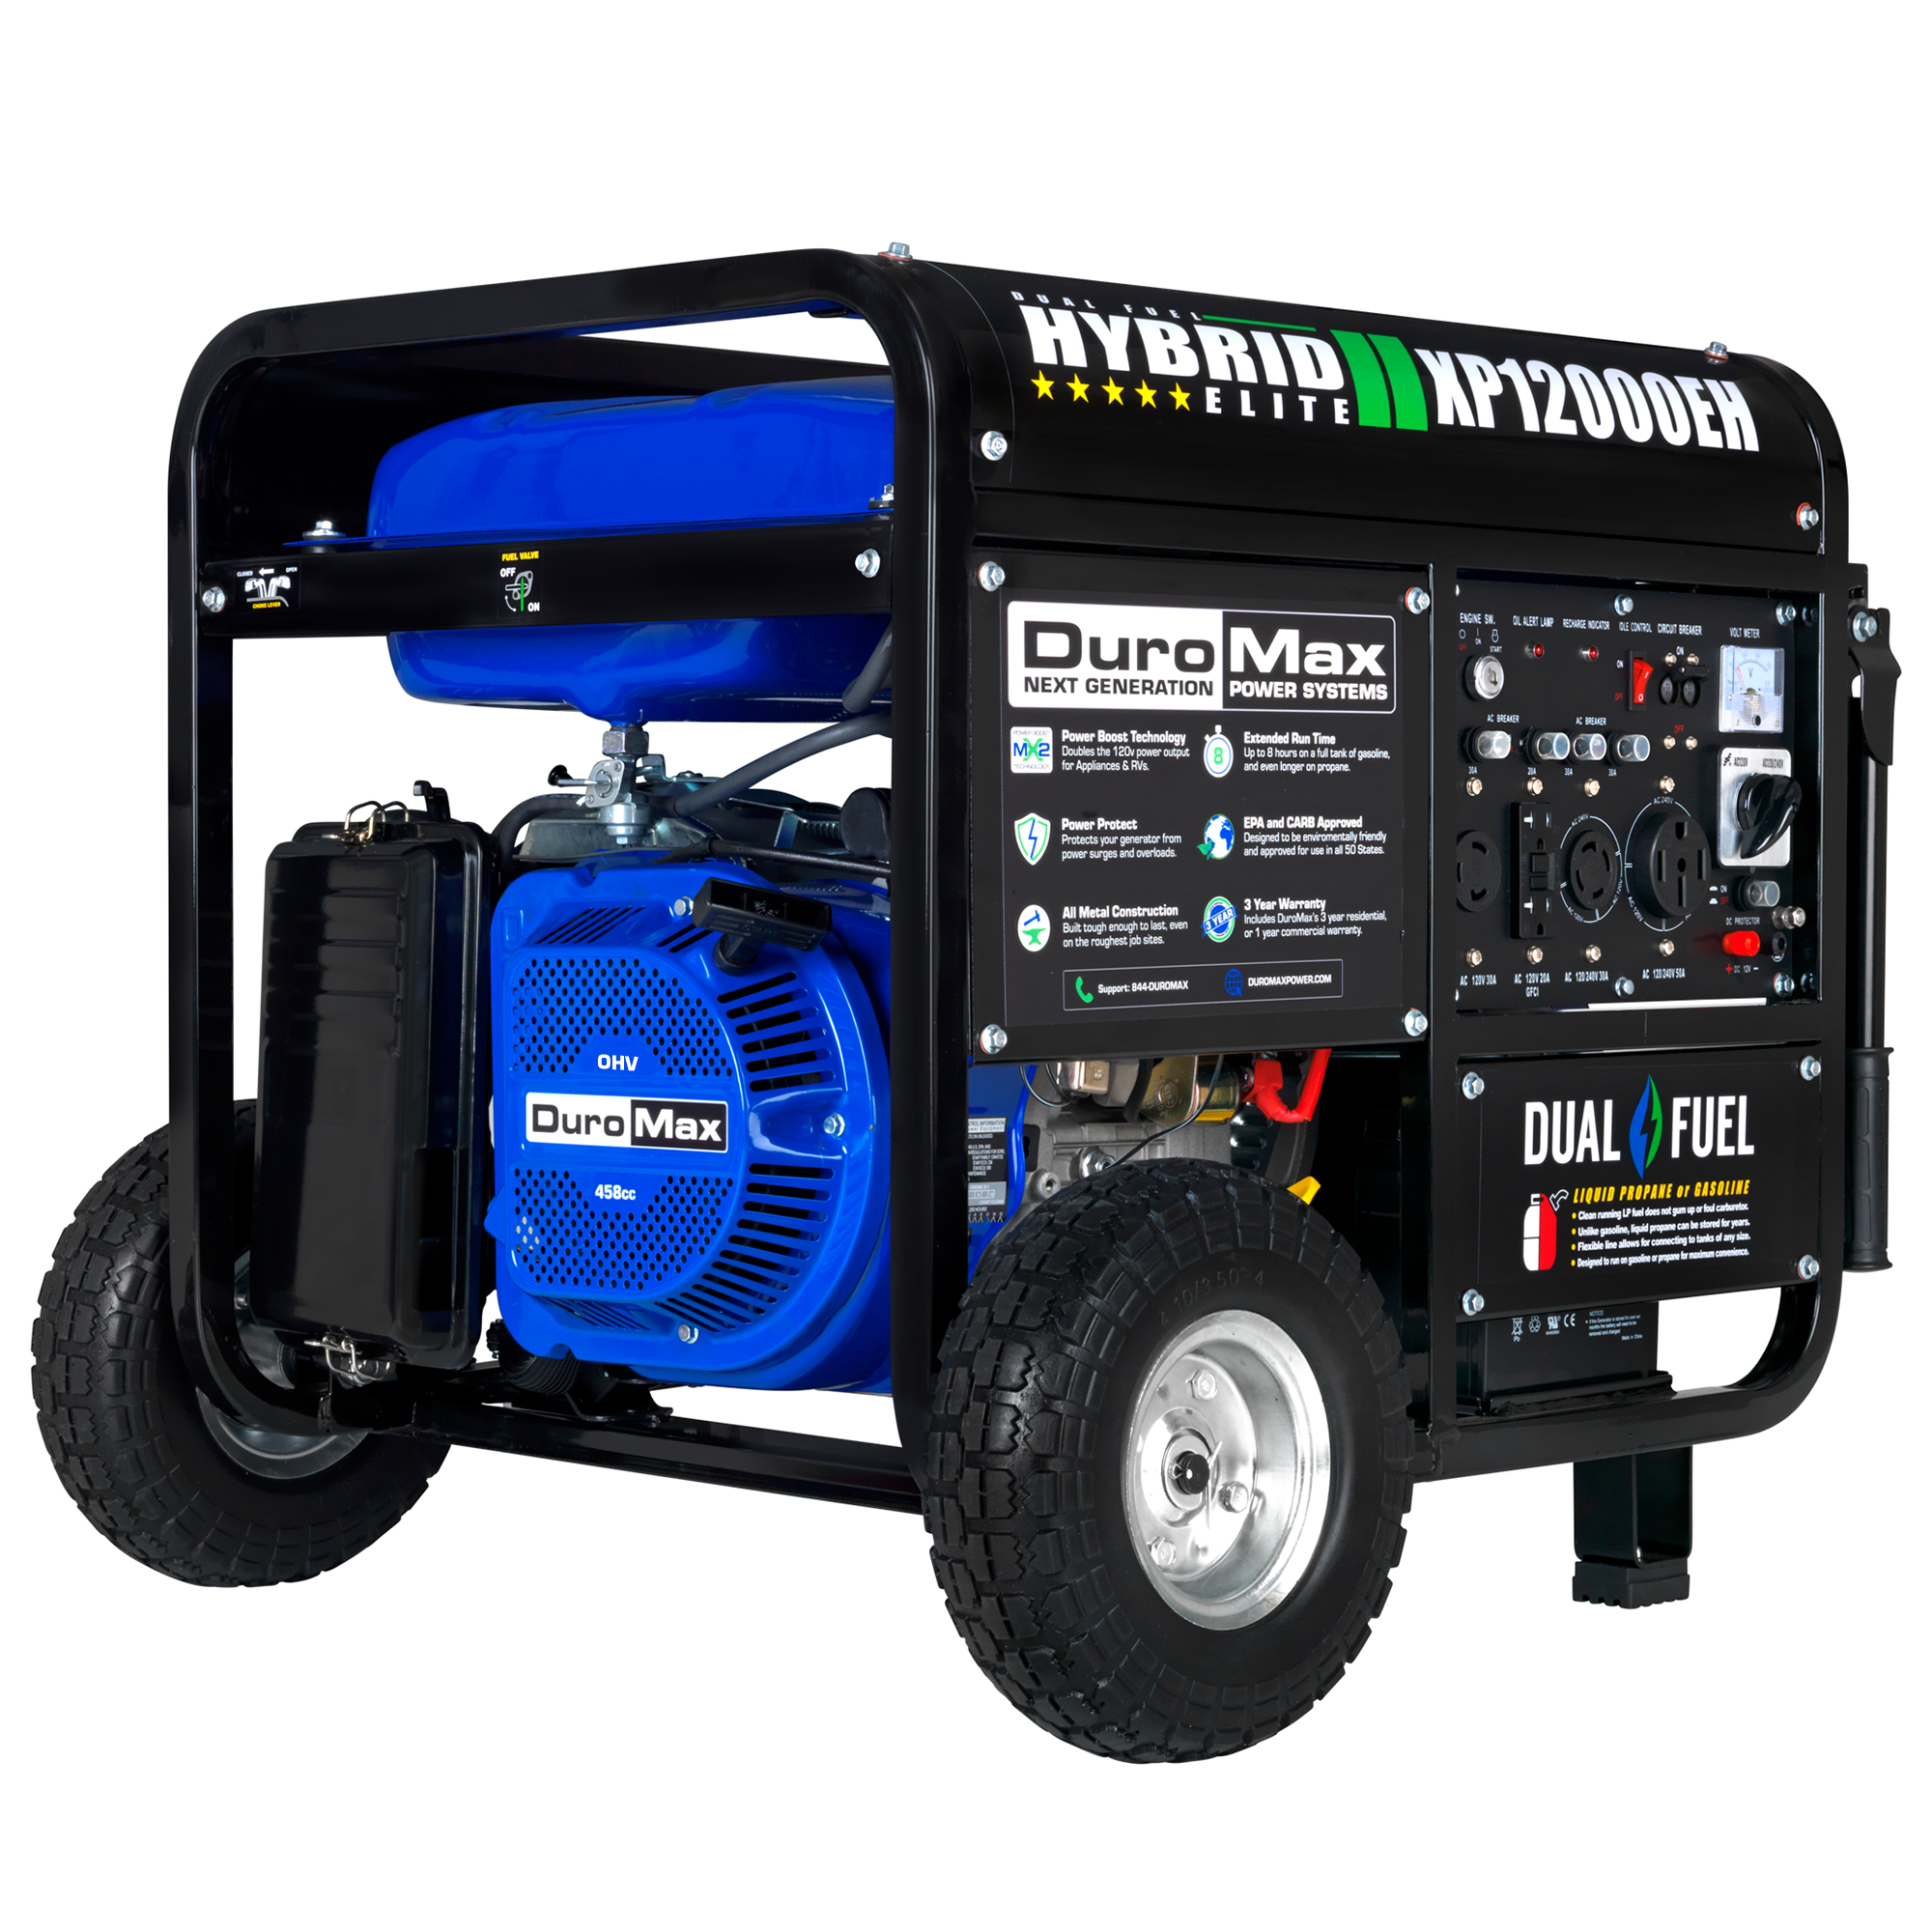 DuroMax, DuroMax XP12000EH 12,000 Watt Portable Dual Fuel Gas Propane Generator